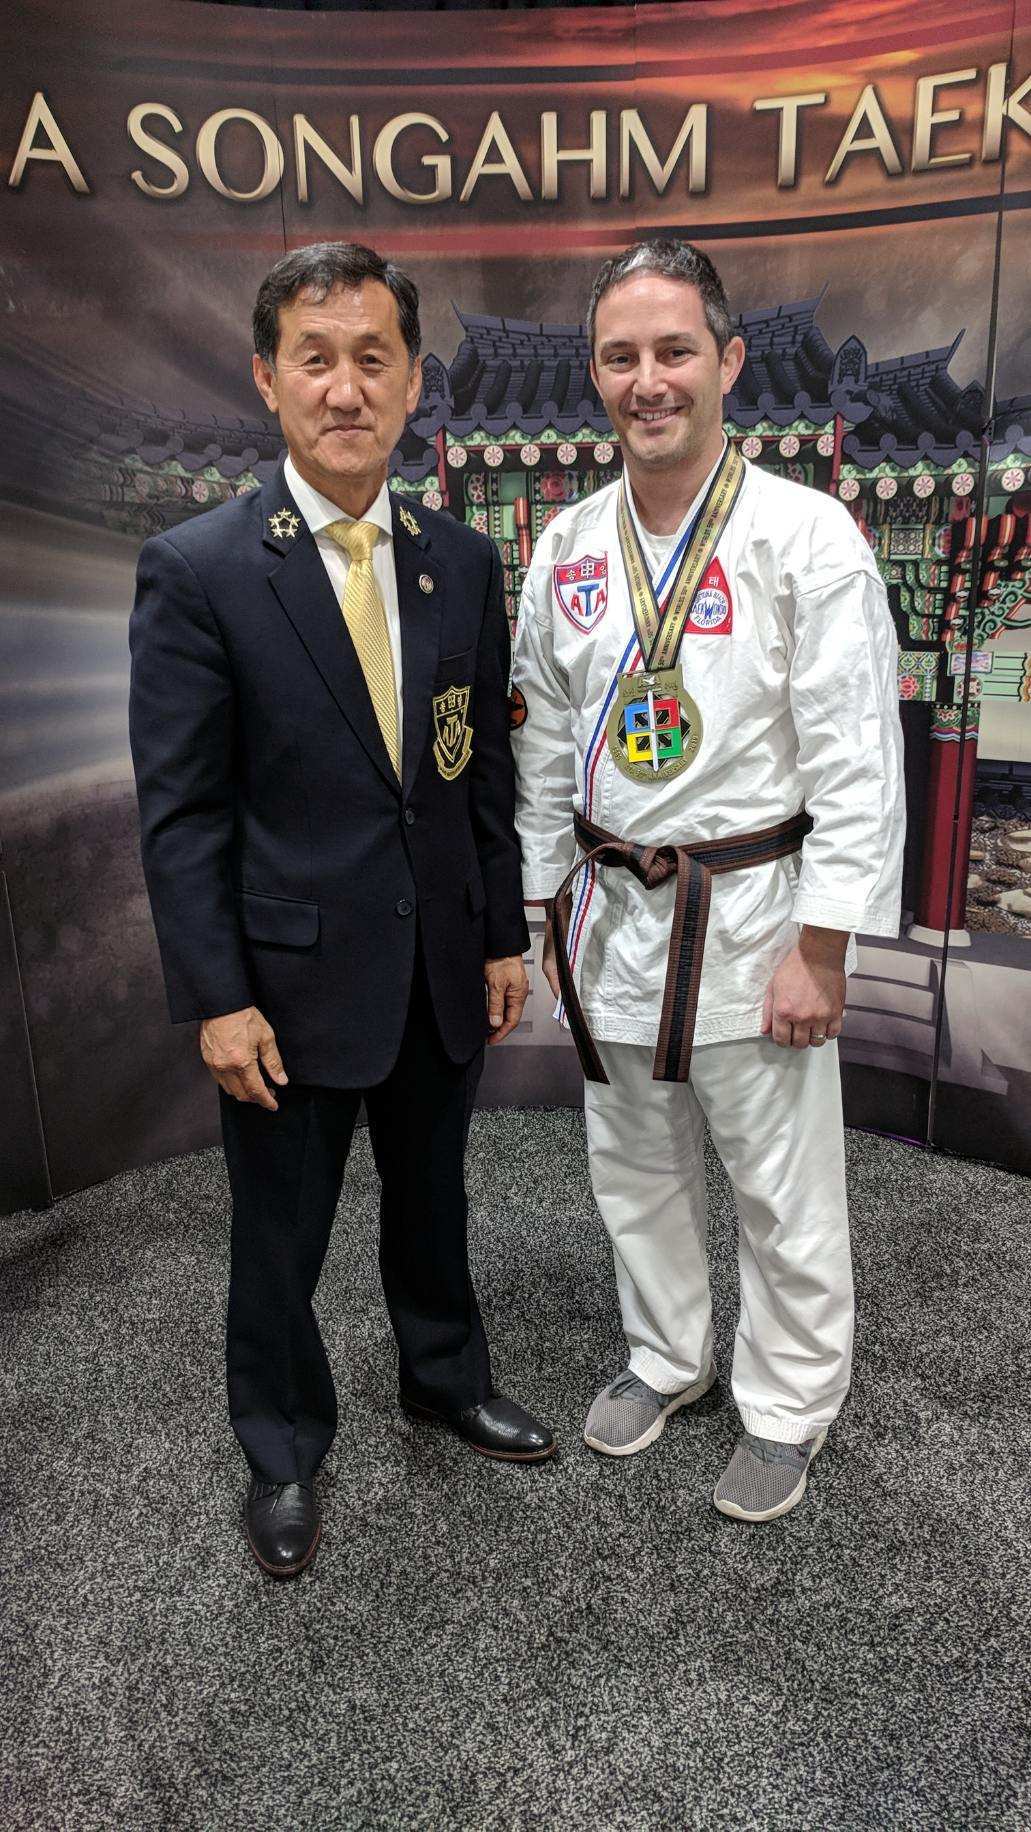 Alan Rosen with Grand Master GK Lee at the World Expo in A Songahm Taekwondo. Photo courtesy of Alan Rosen